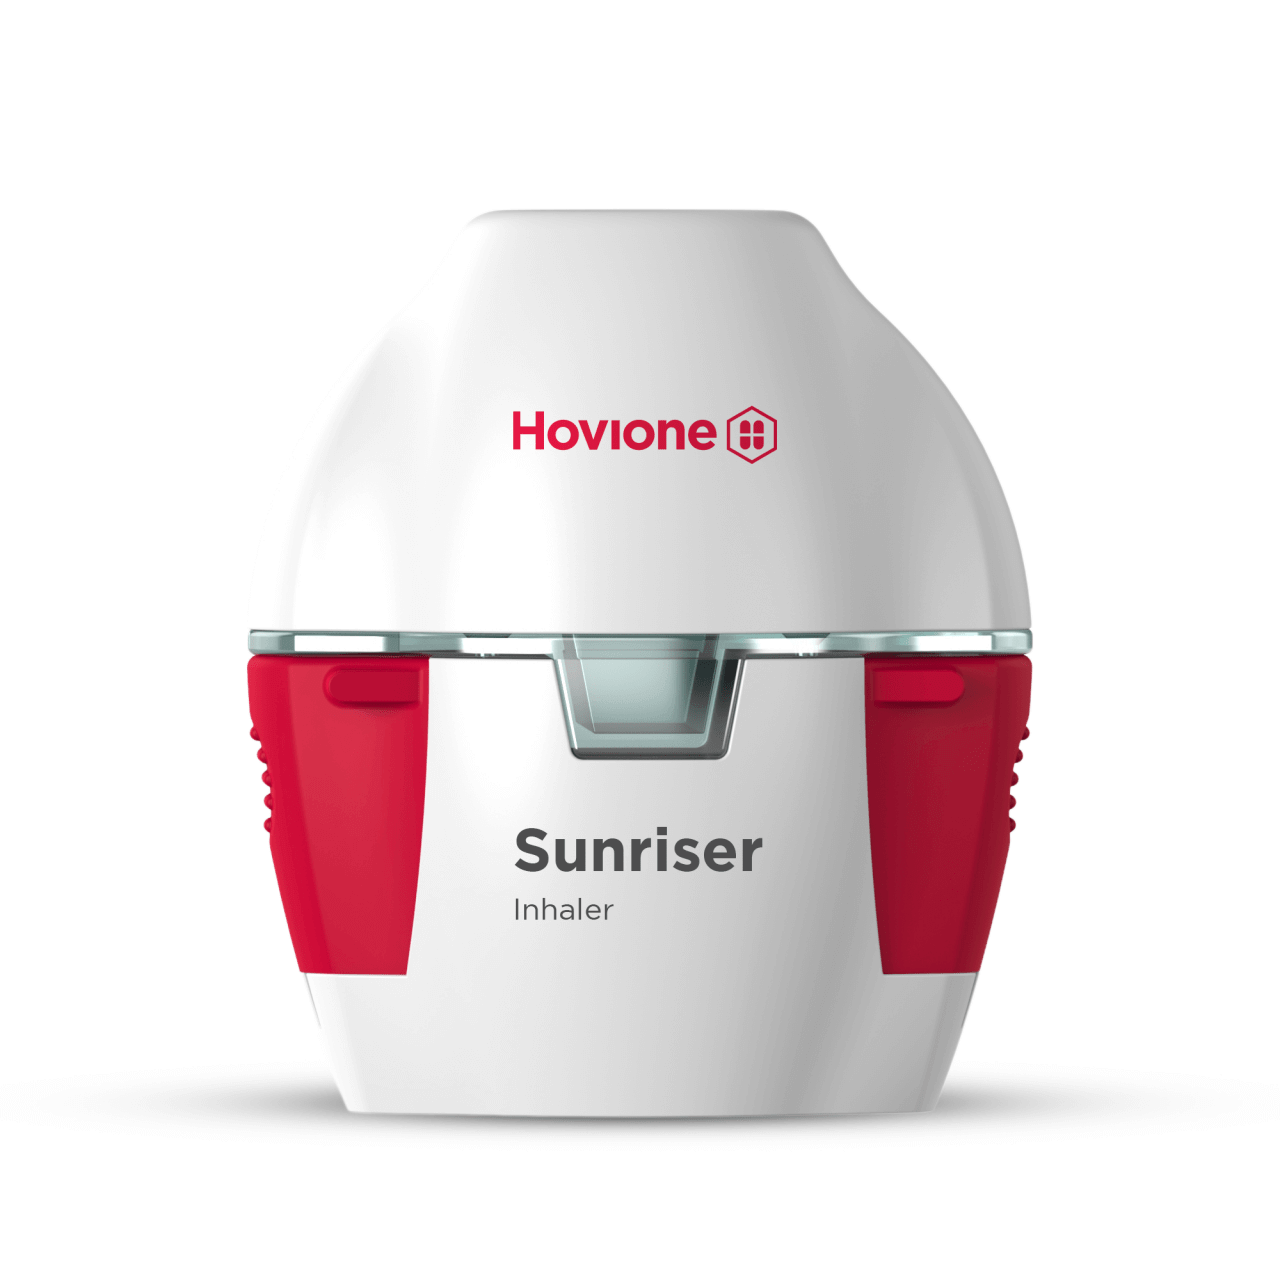 SUNRISER device dpi drug powder inhaler | Hovione